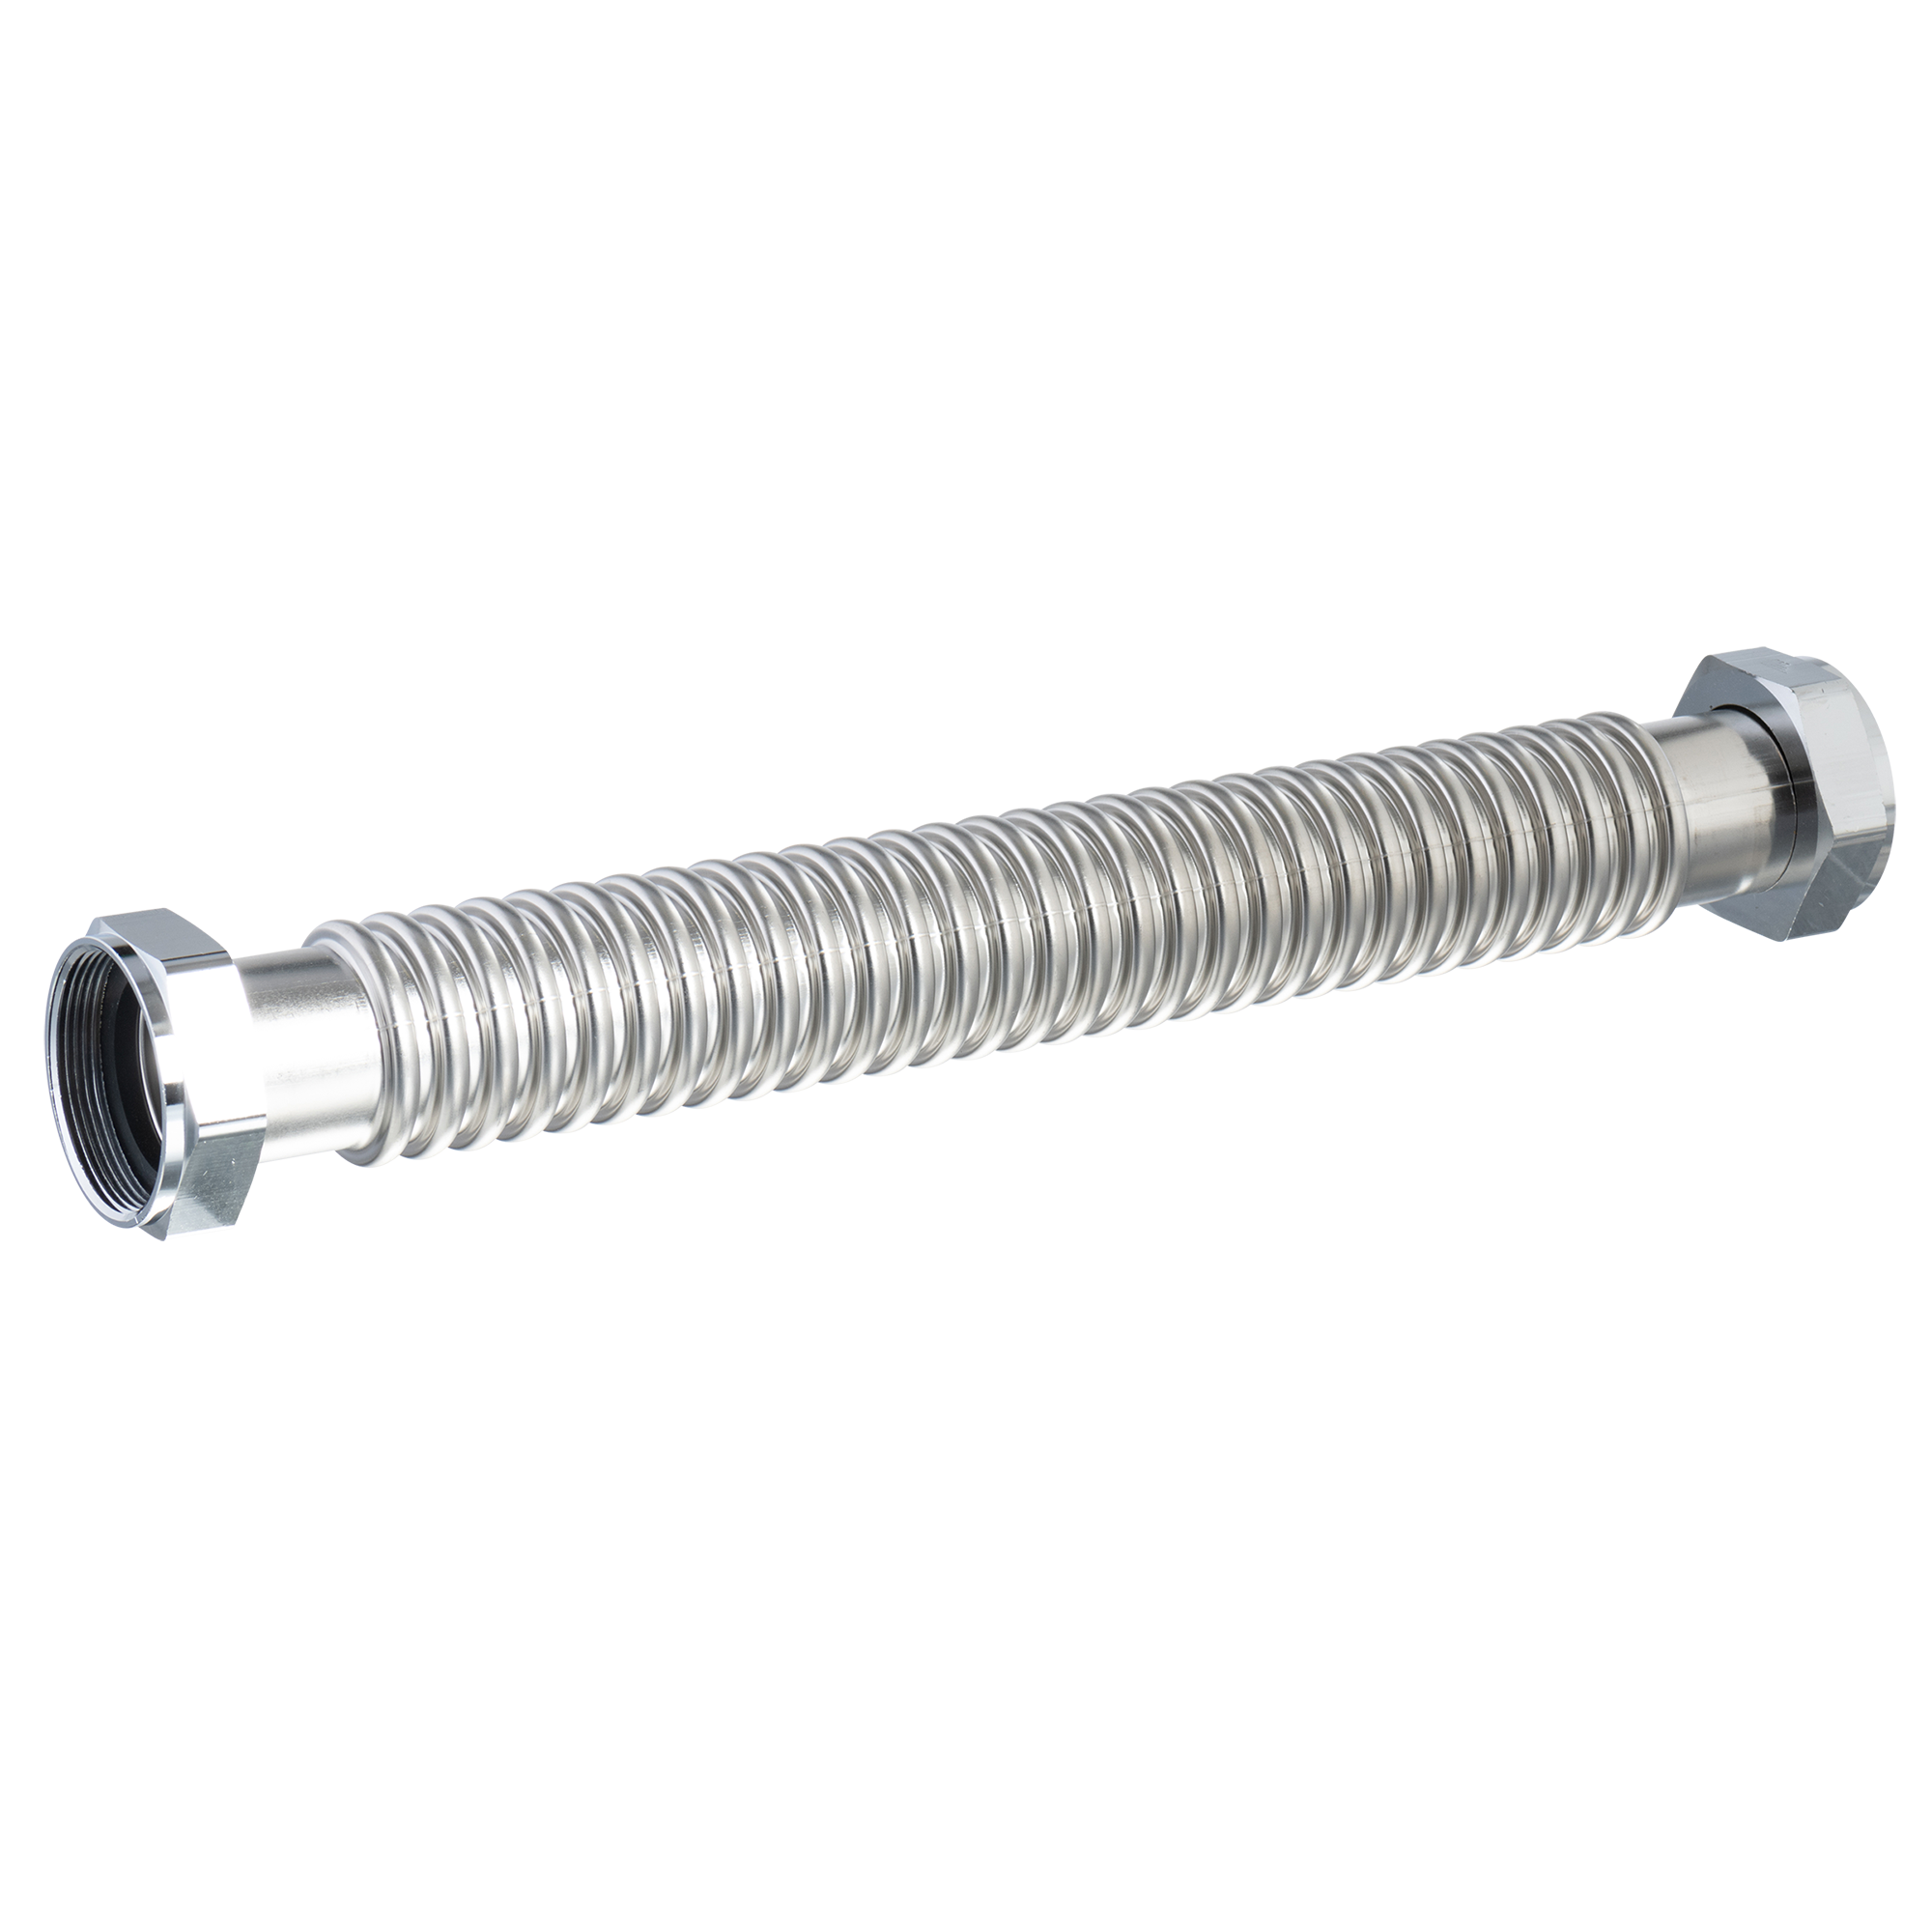 Intelmann Aluminium Flexible Pipe 71 mm, Length 5 m + 2 Stainless Steel  Hose Clamps